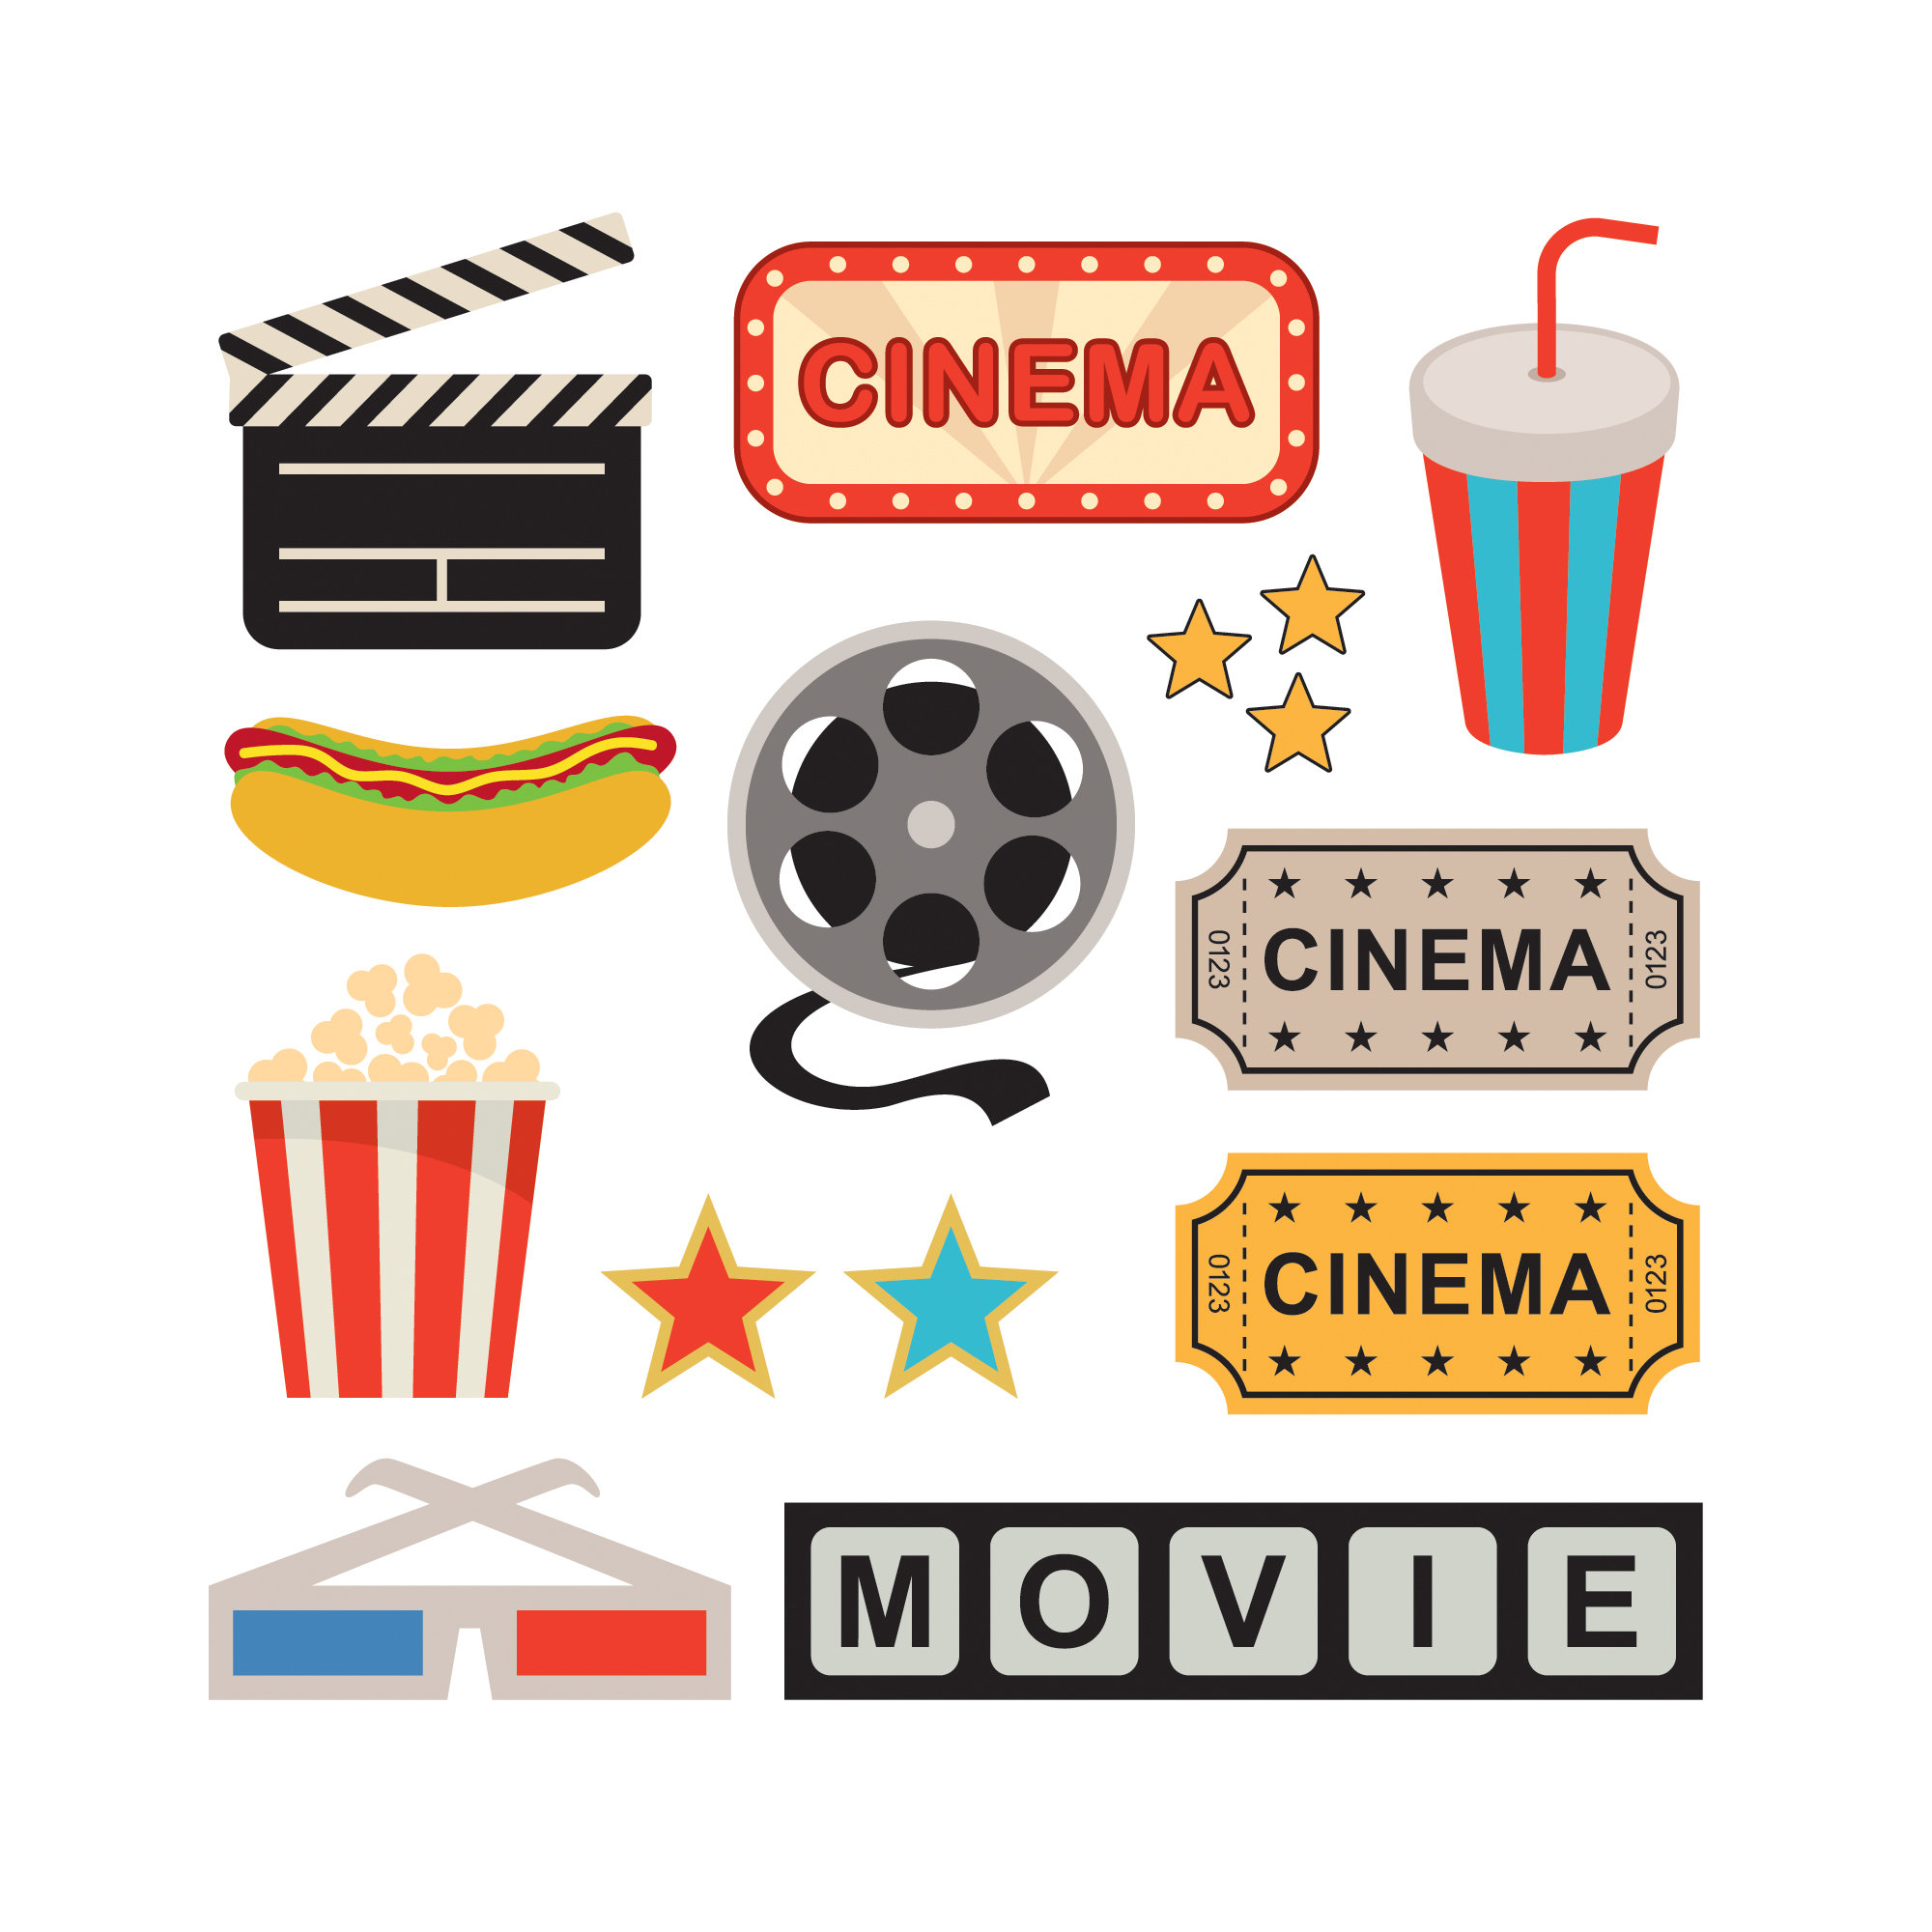 Cinema Clipart. Digital Cinema. Cinema Vector. Ticket, Popcorn